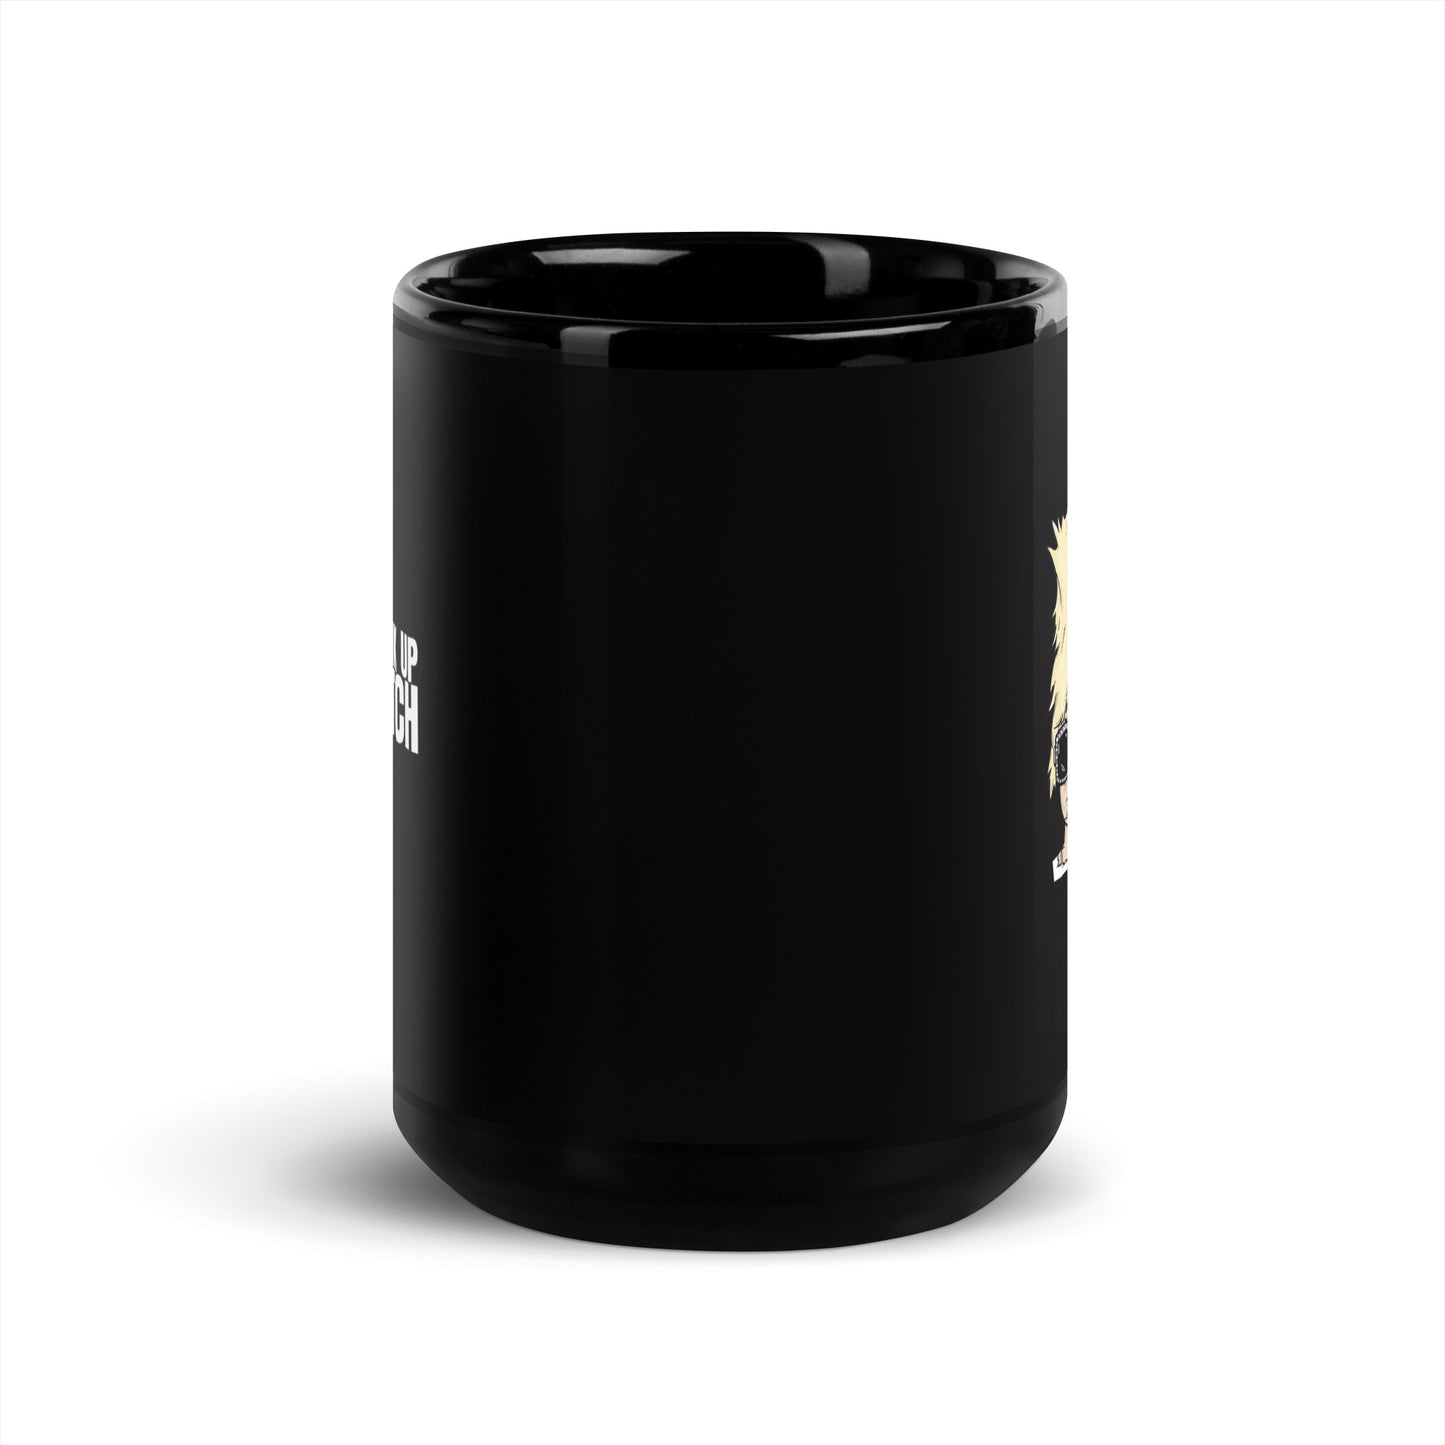 Drink Up Betch | Black Glossy Mug